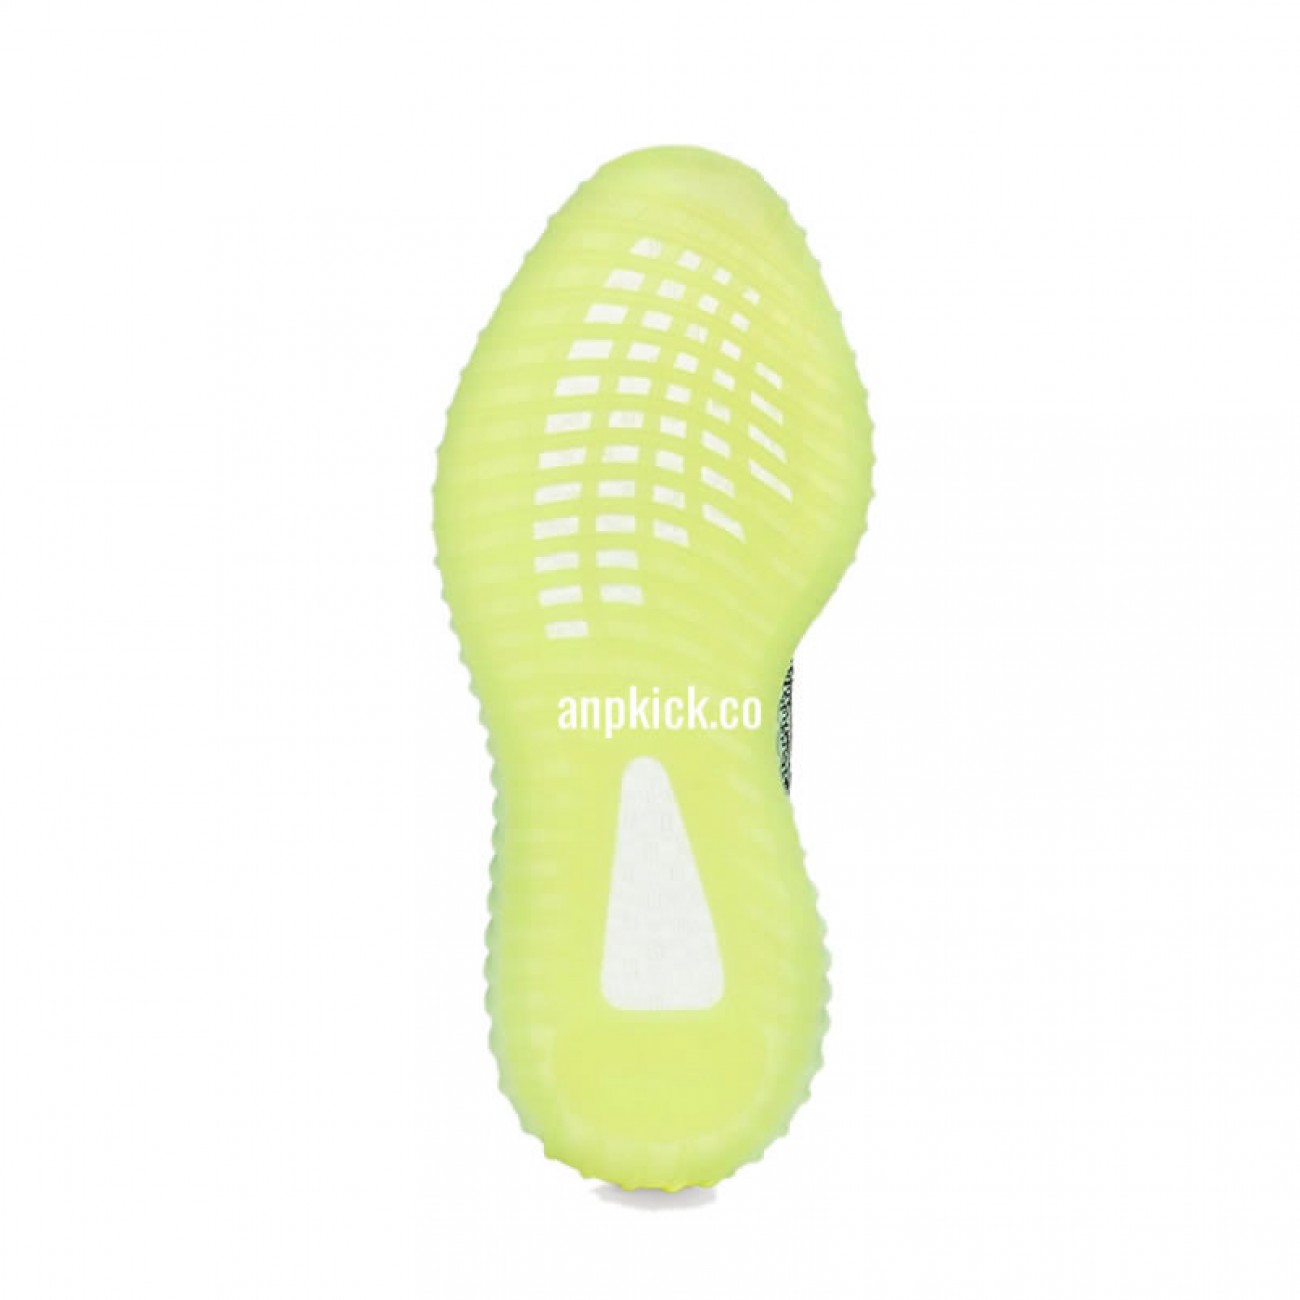 adidas Yeezy Boost 350 V2 "Yeezreel" Reflective Green Black Release Date FX4130